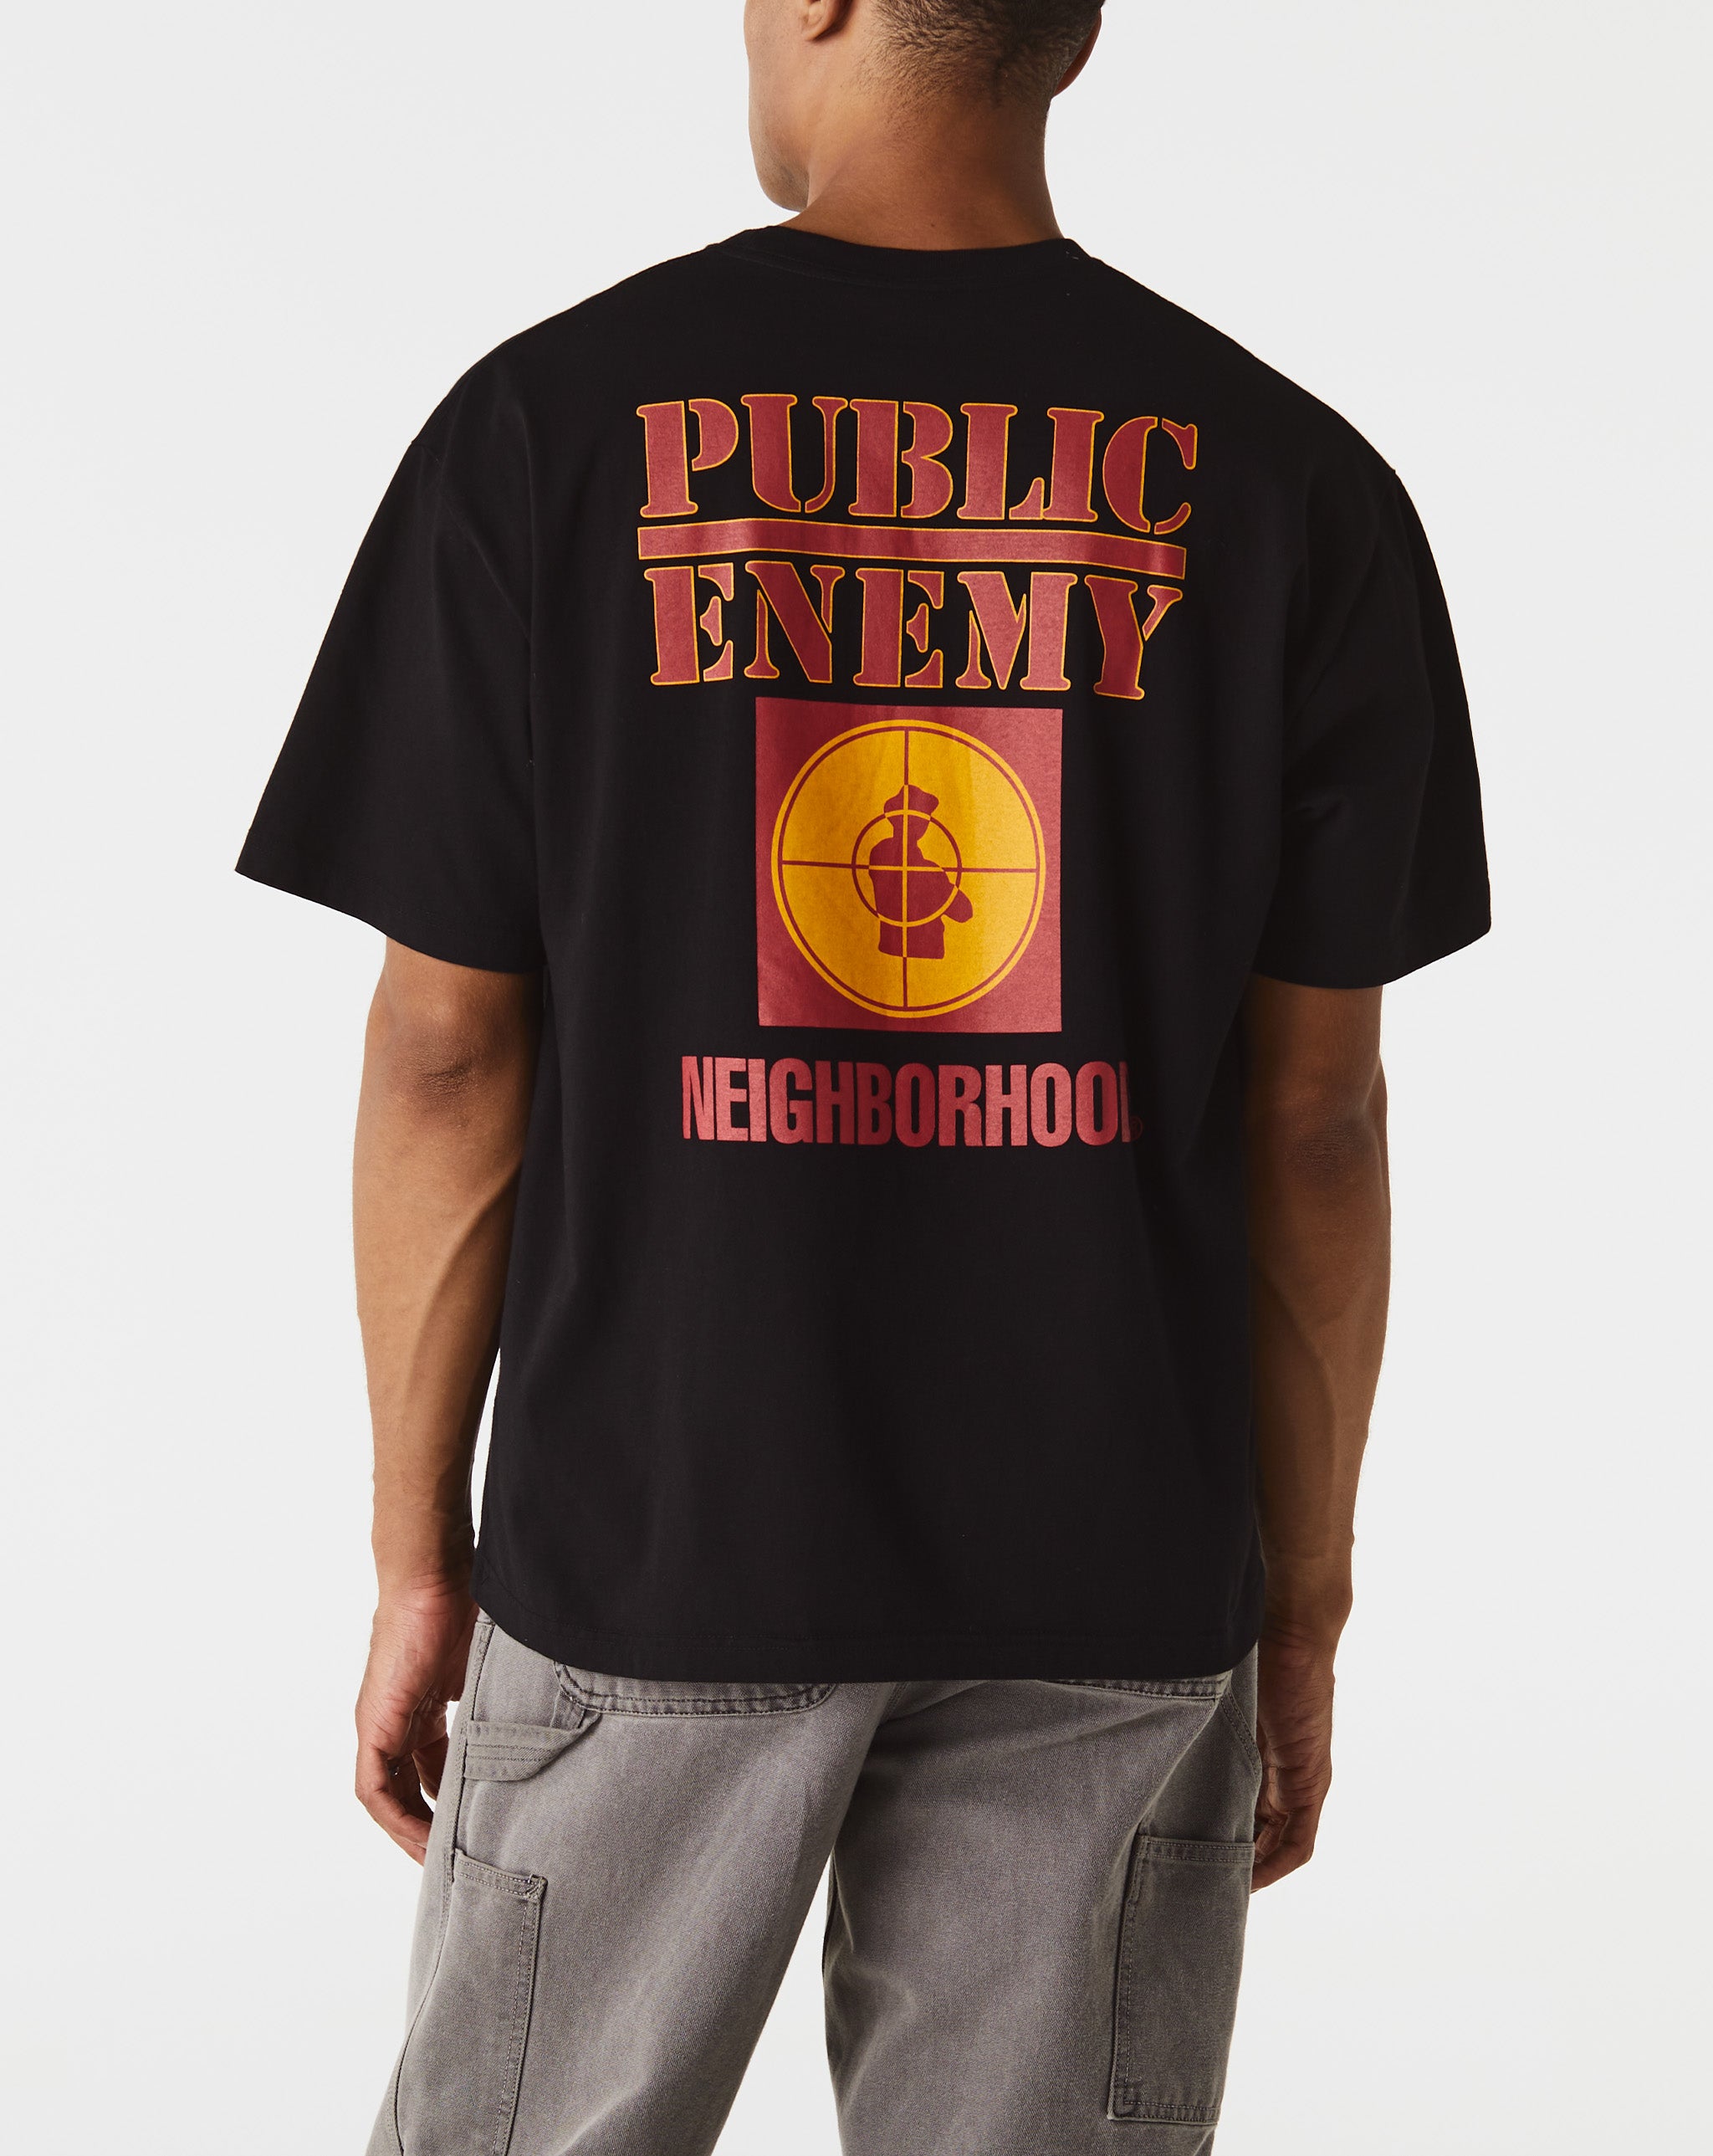 Neighborhood Public Enemy x T-Shirt SS-1  - XHIBITION